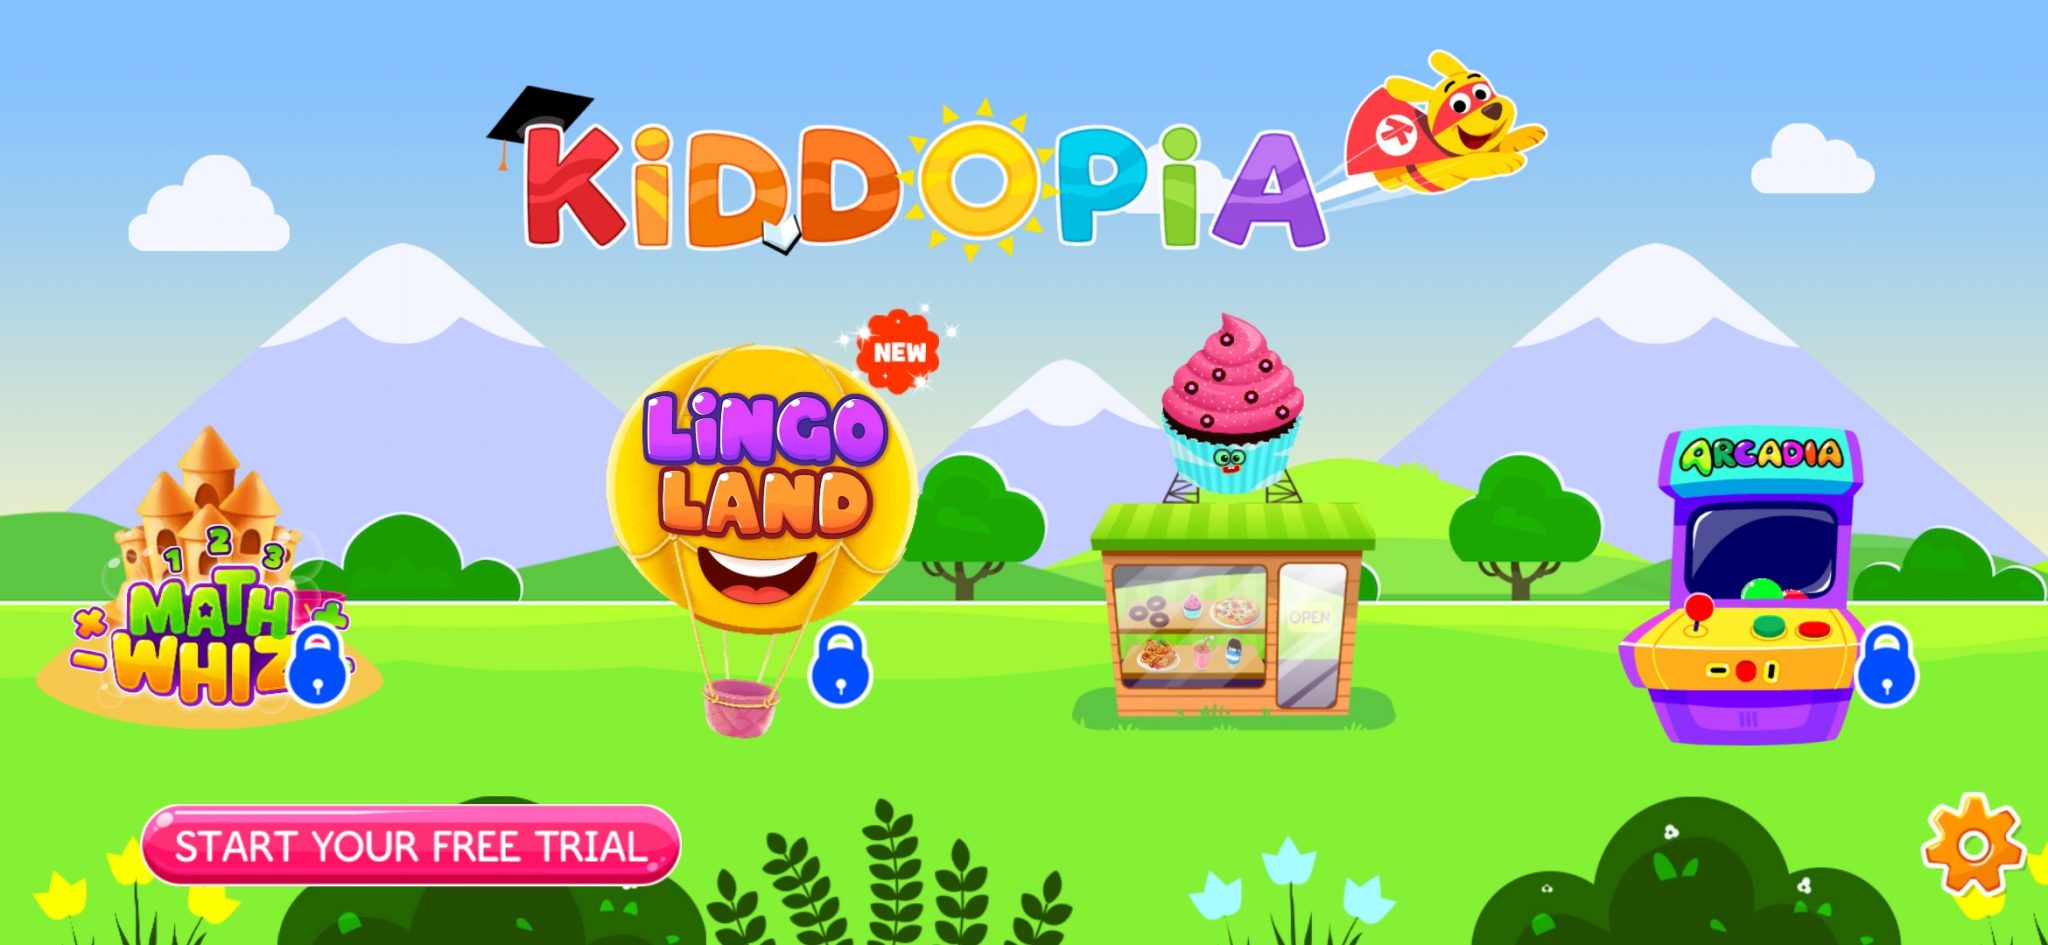 Kiddopia